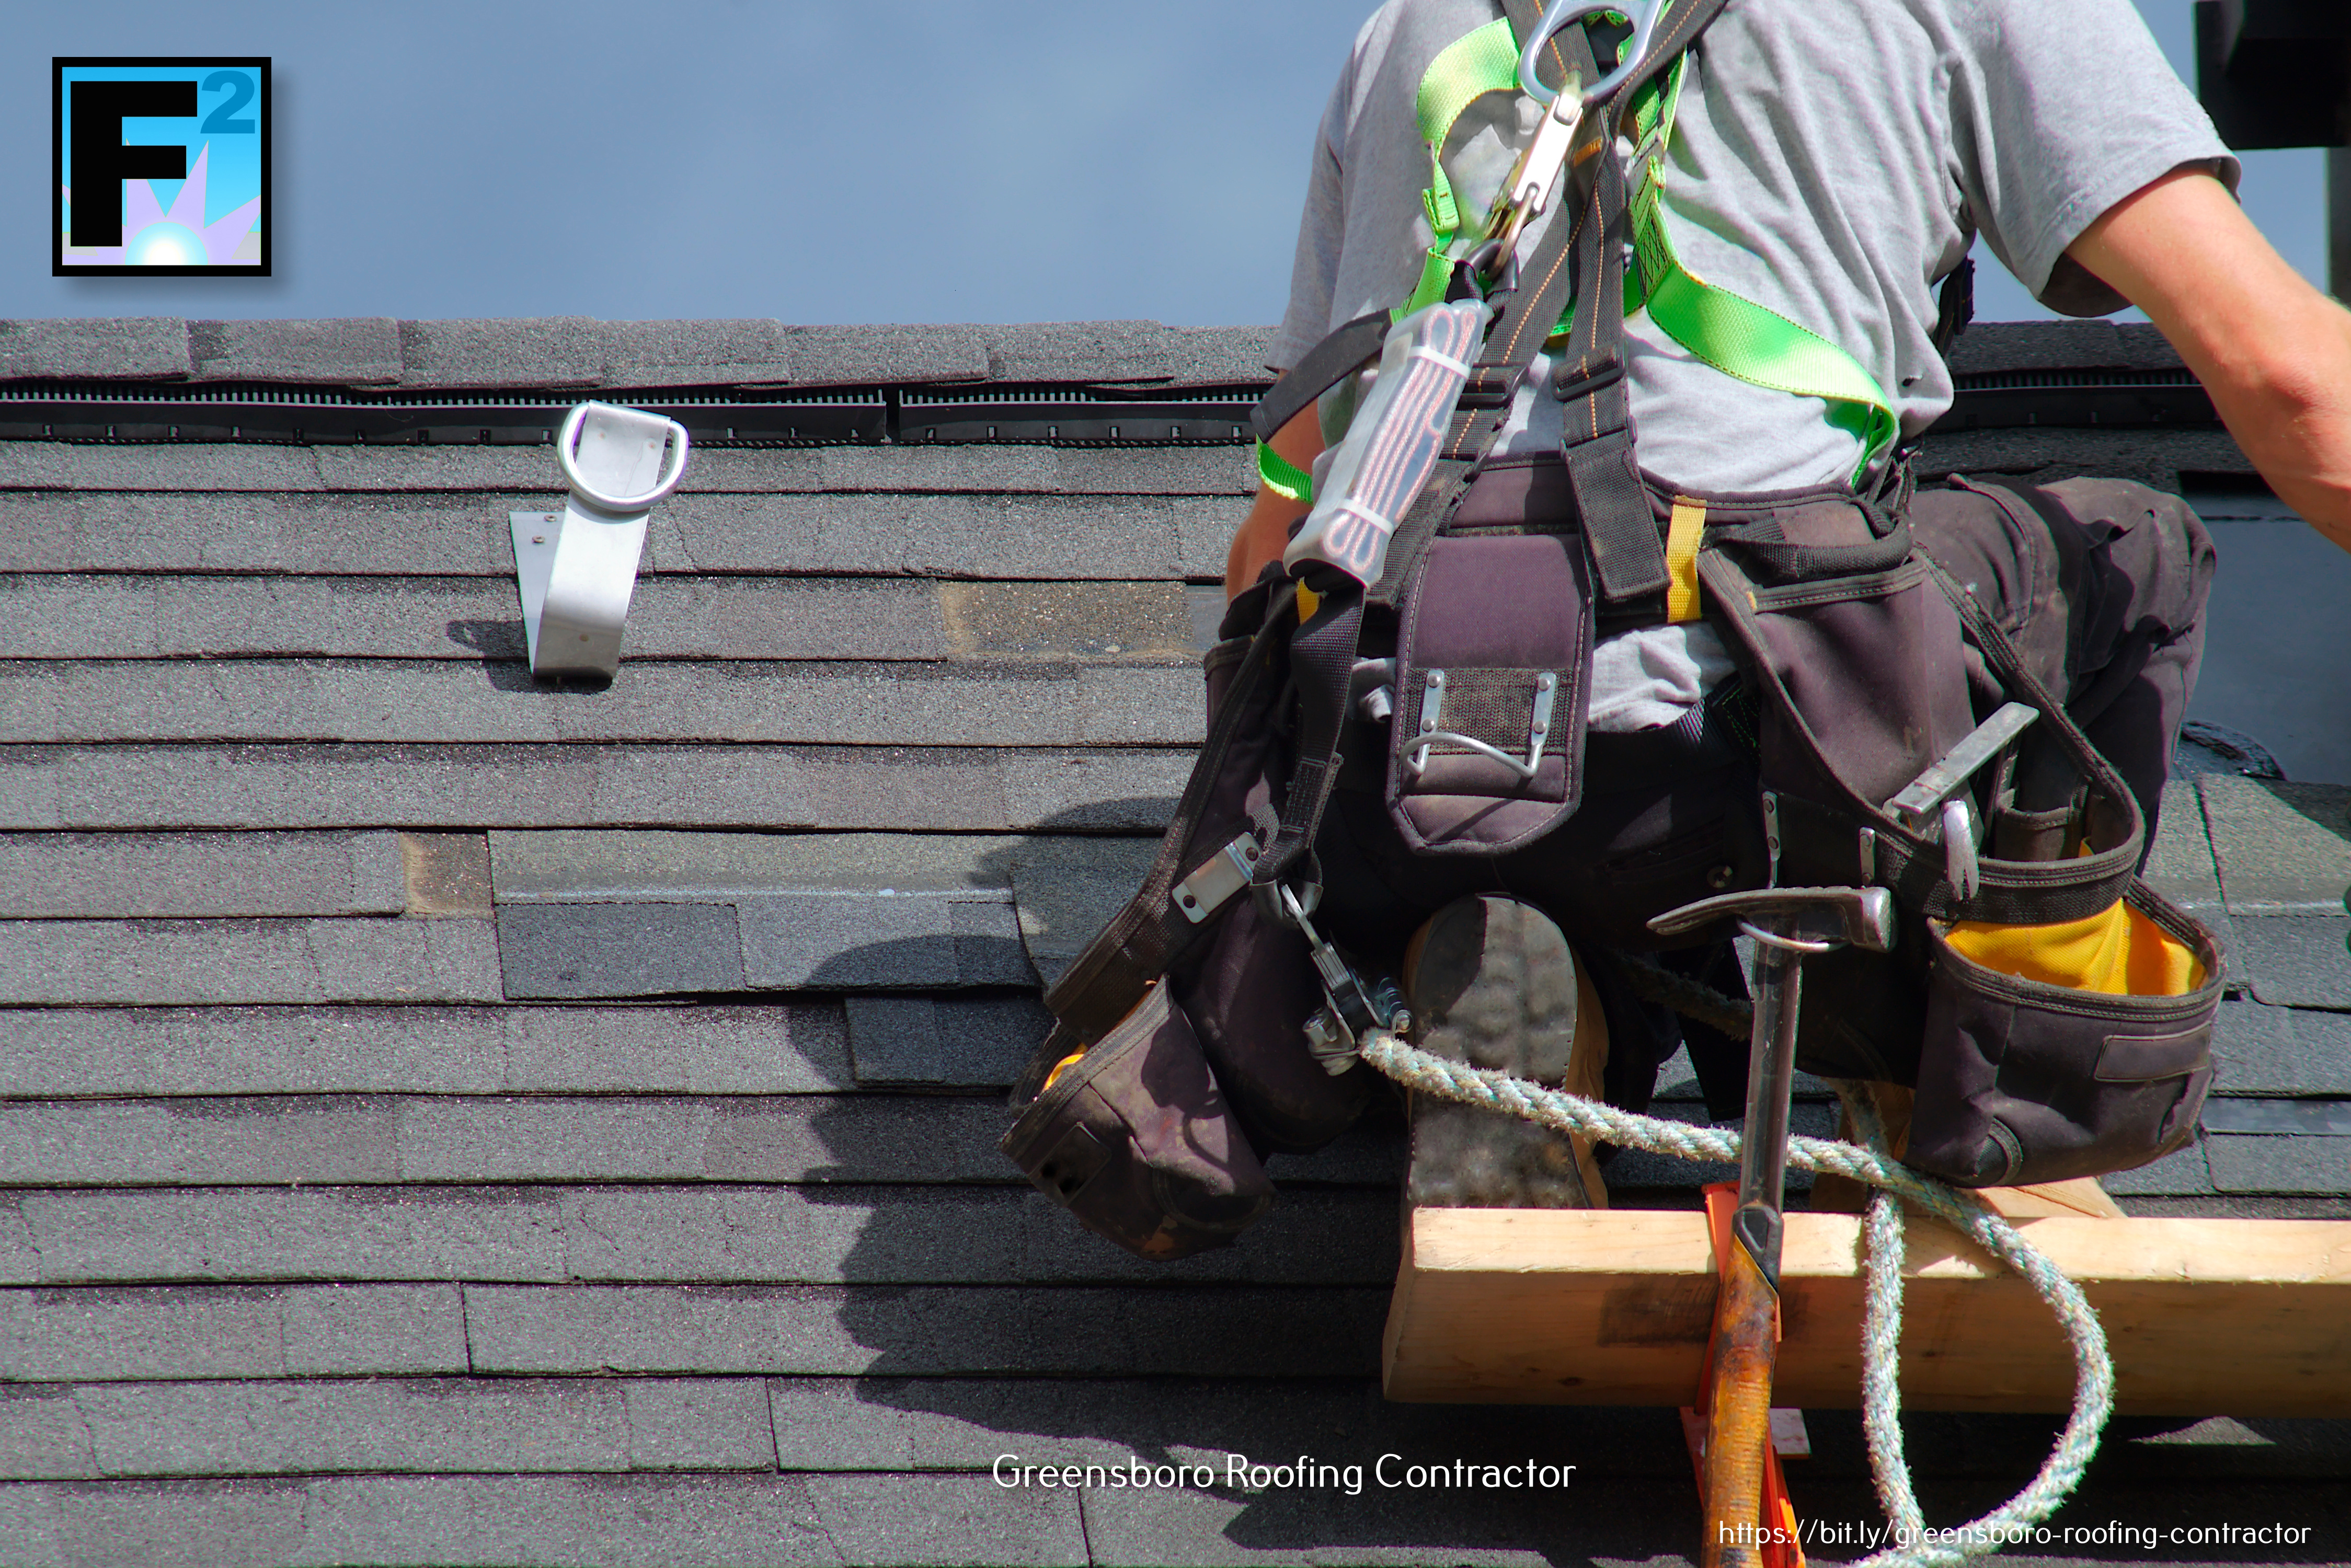 F2 Construction and Development LLC - Greensboro Roofing Contractor Explains Benefits of Proper Roof Maintenance 